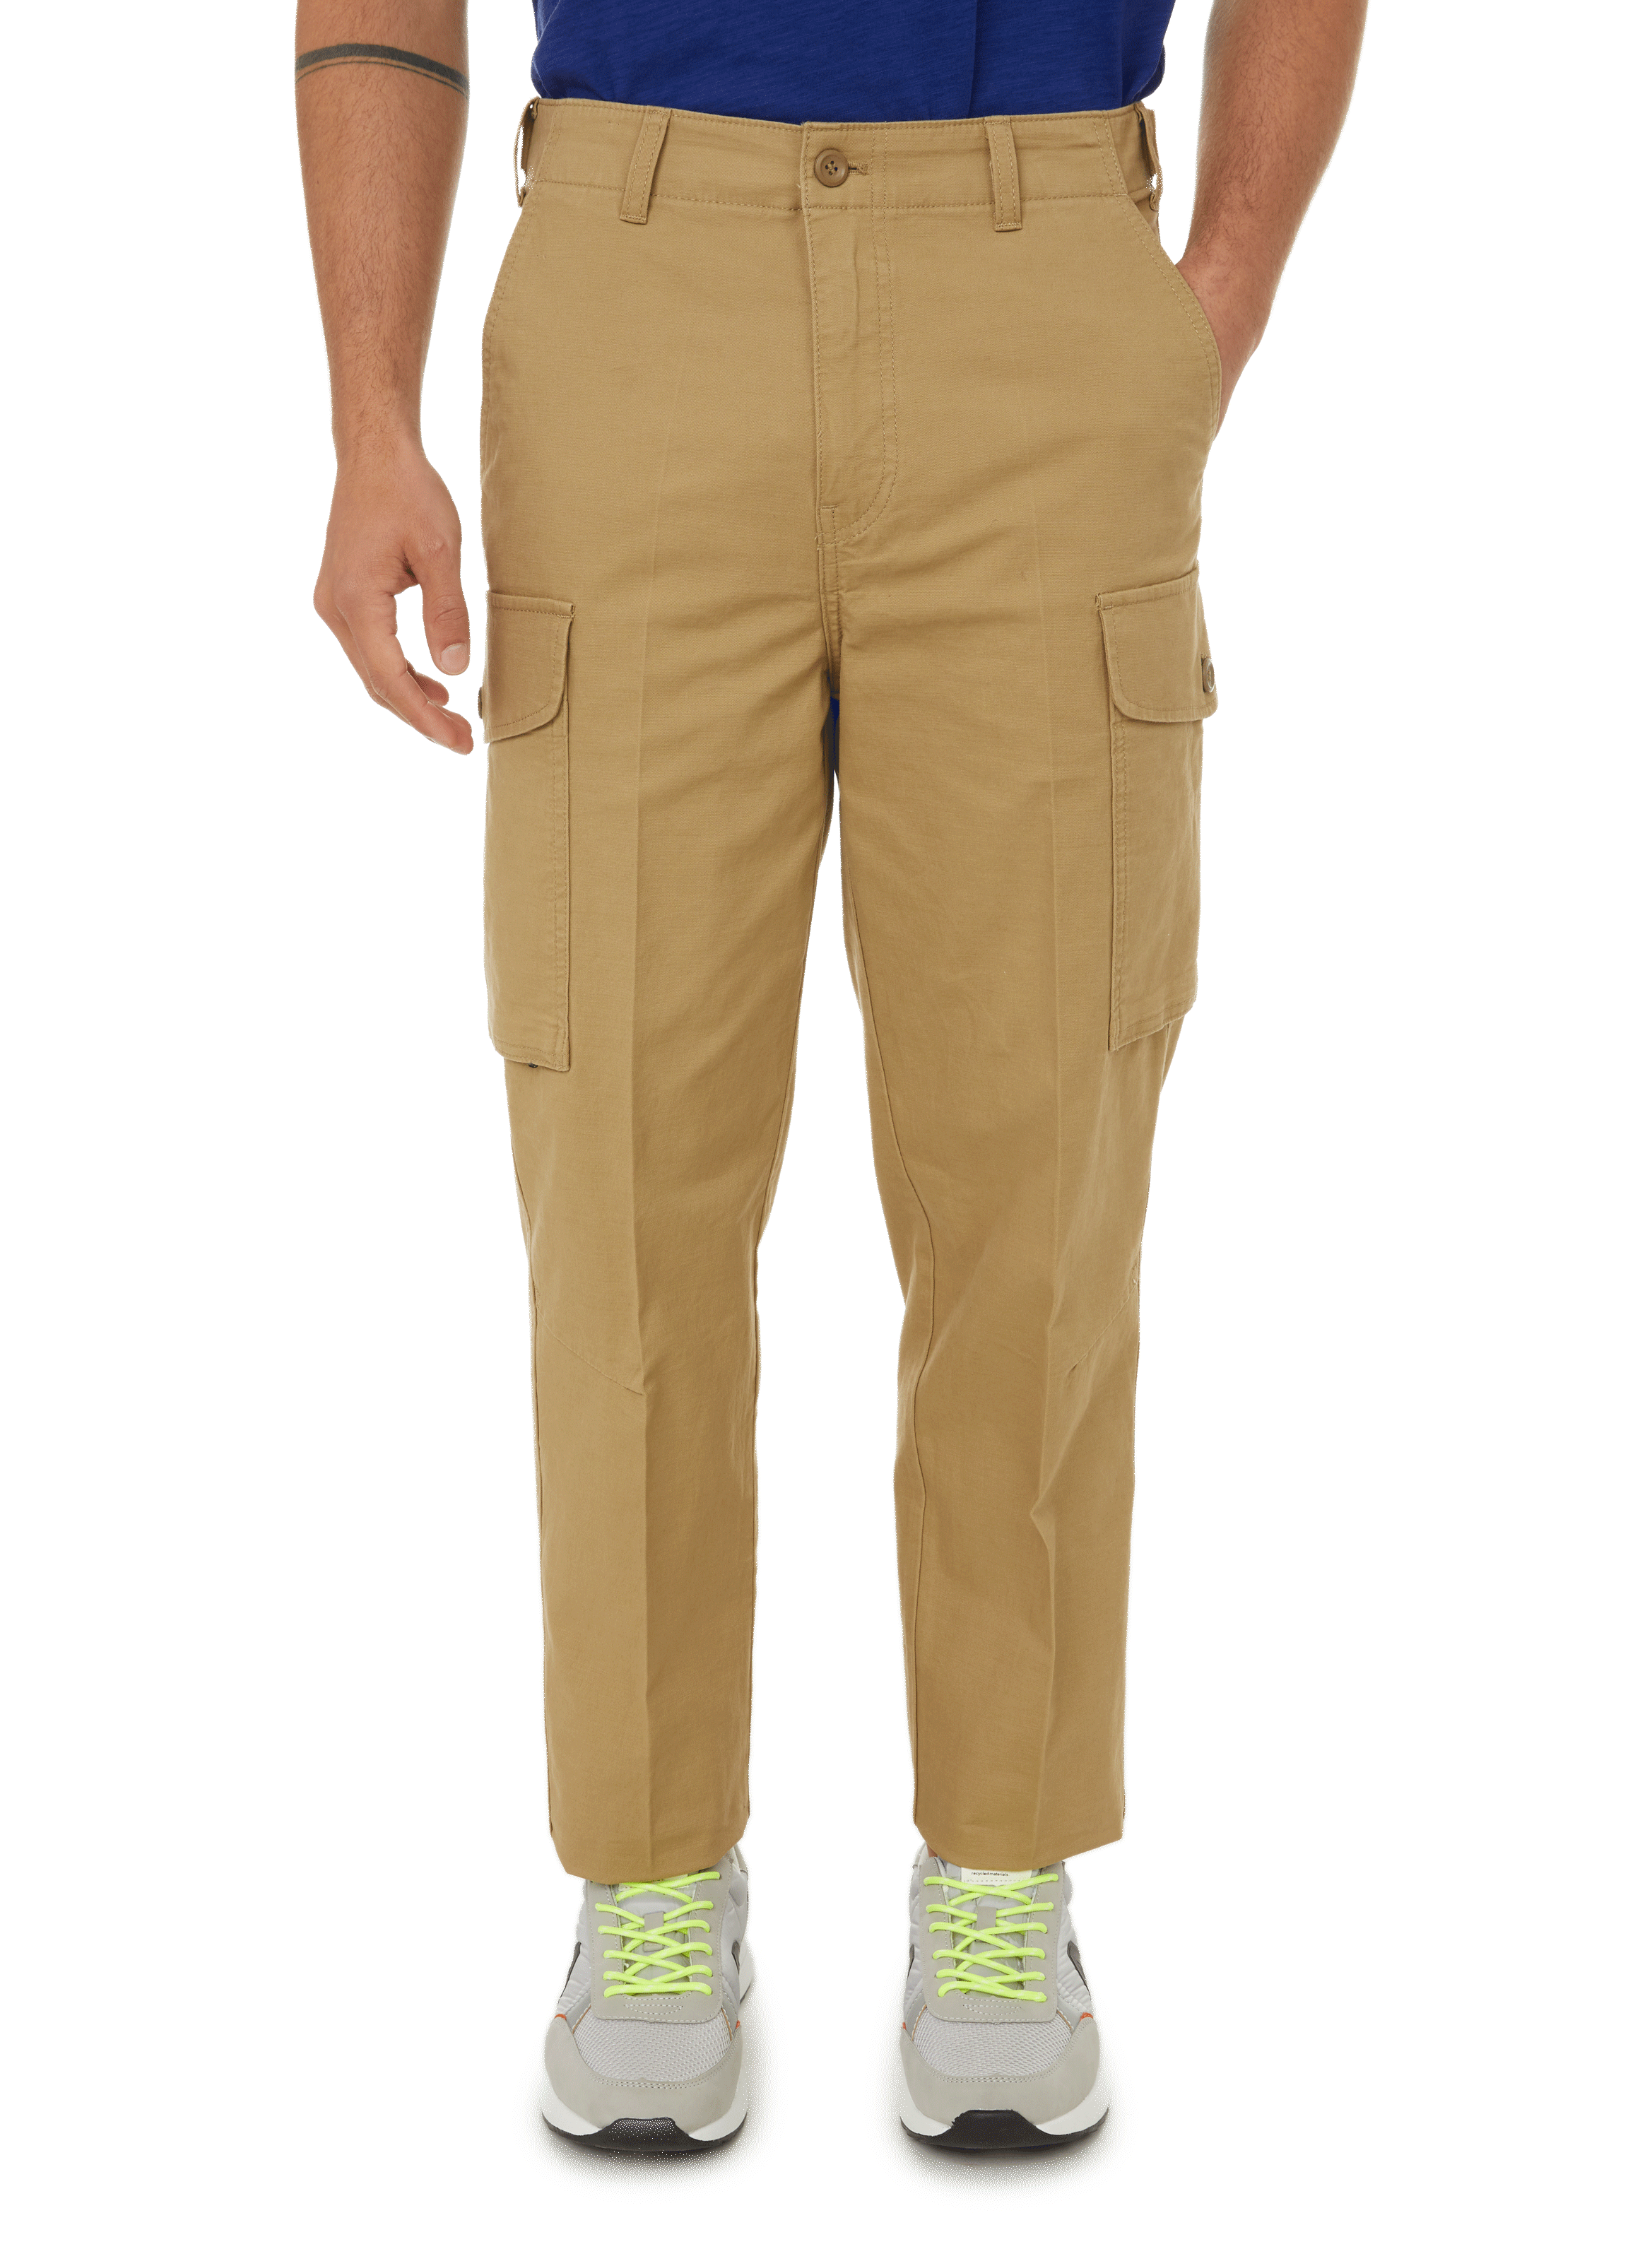 Dockers Men's Tapered Fit Cargo Jogger Pants - Choose SZ/color | eBay